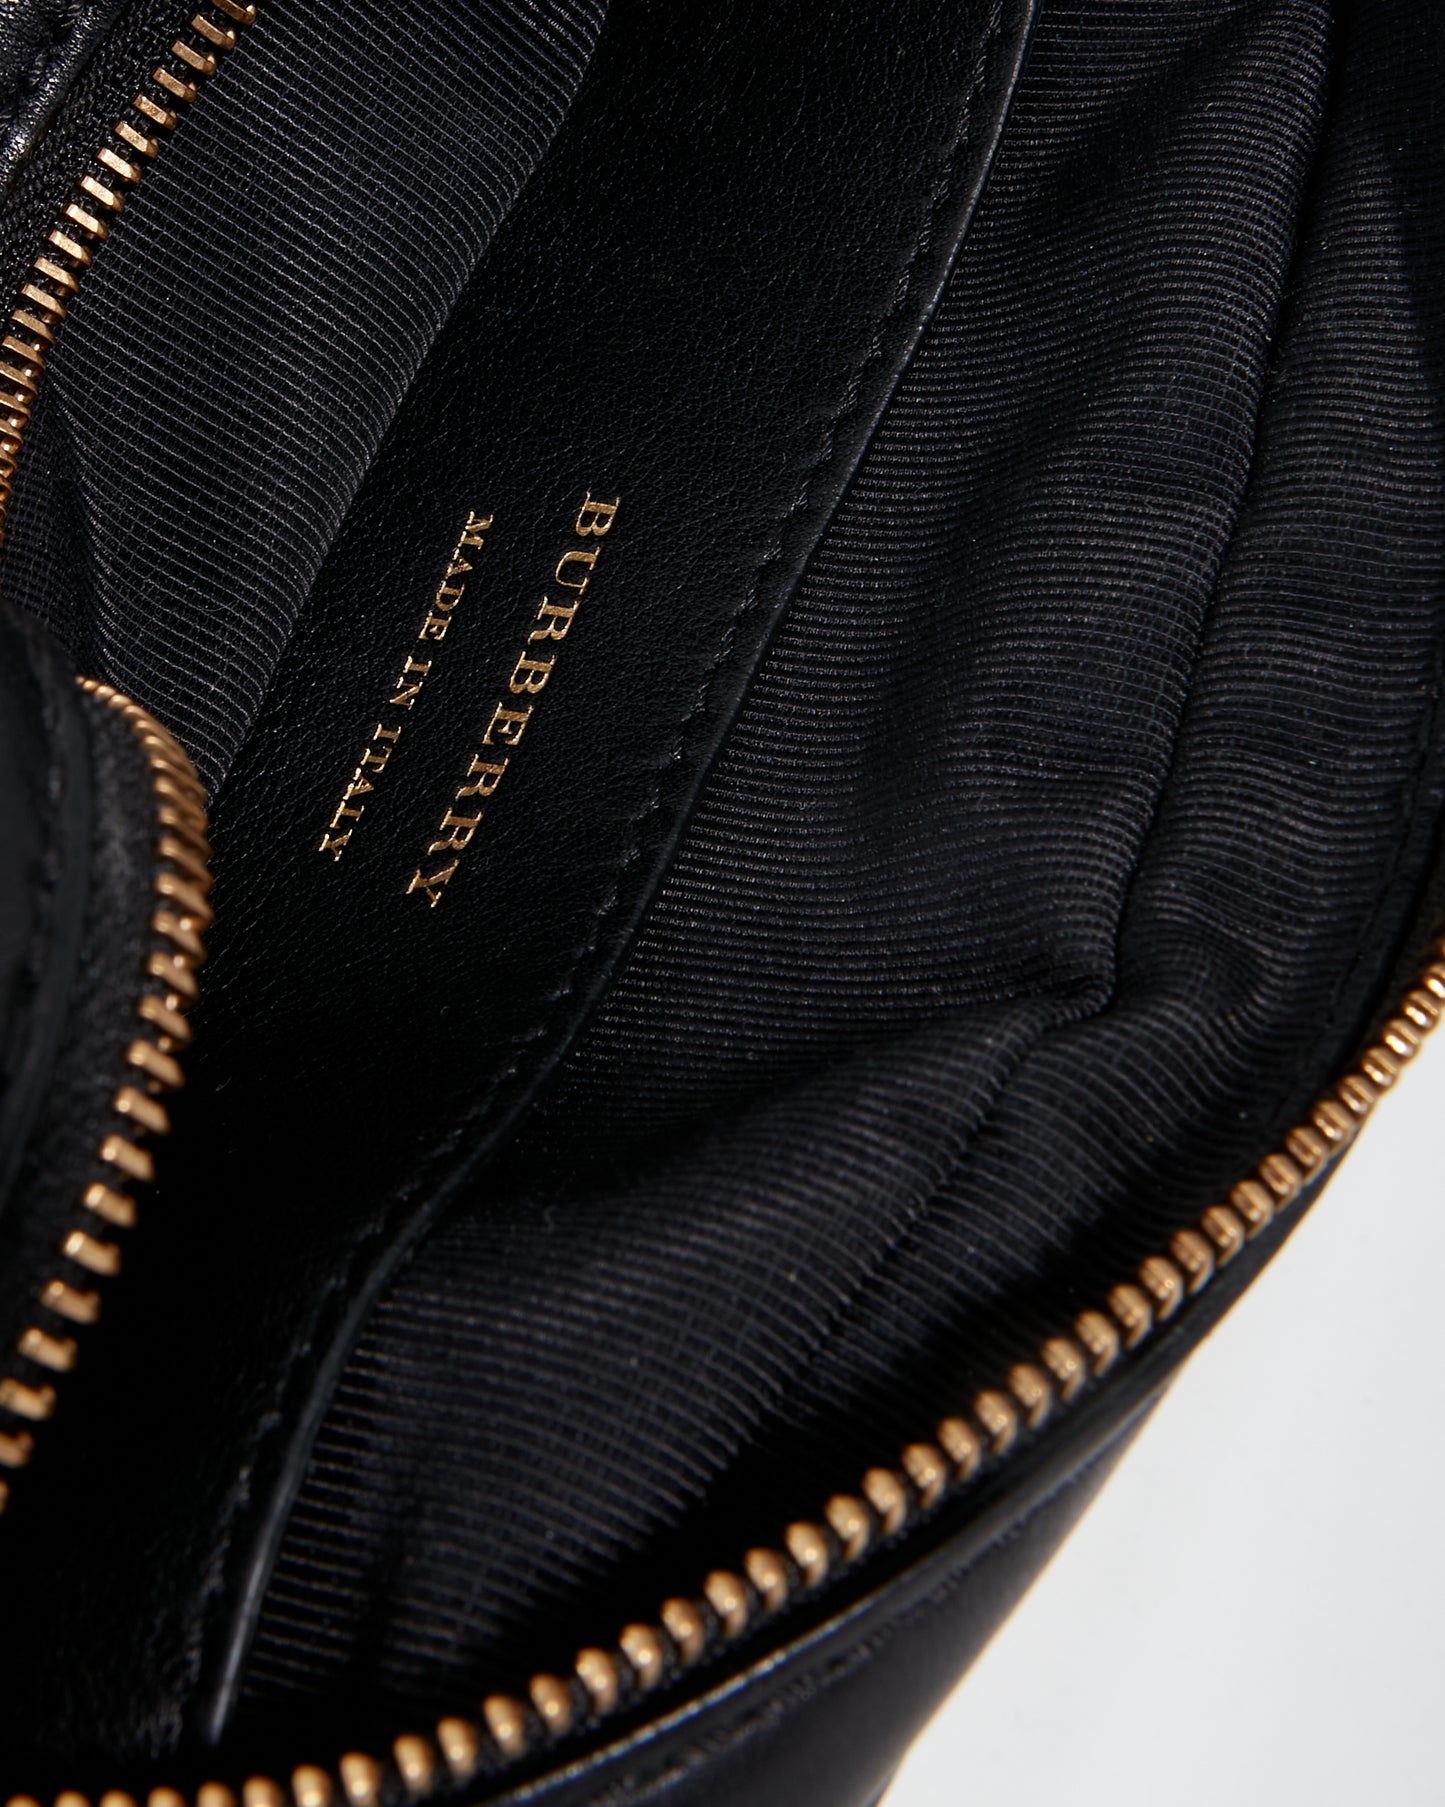 Burberry Black Leather/Canvas Haymarket Check Waist Bag